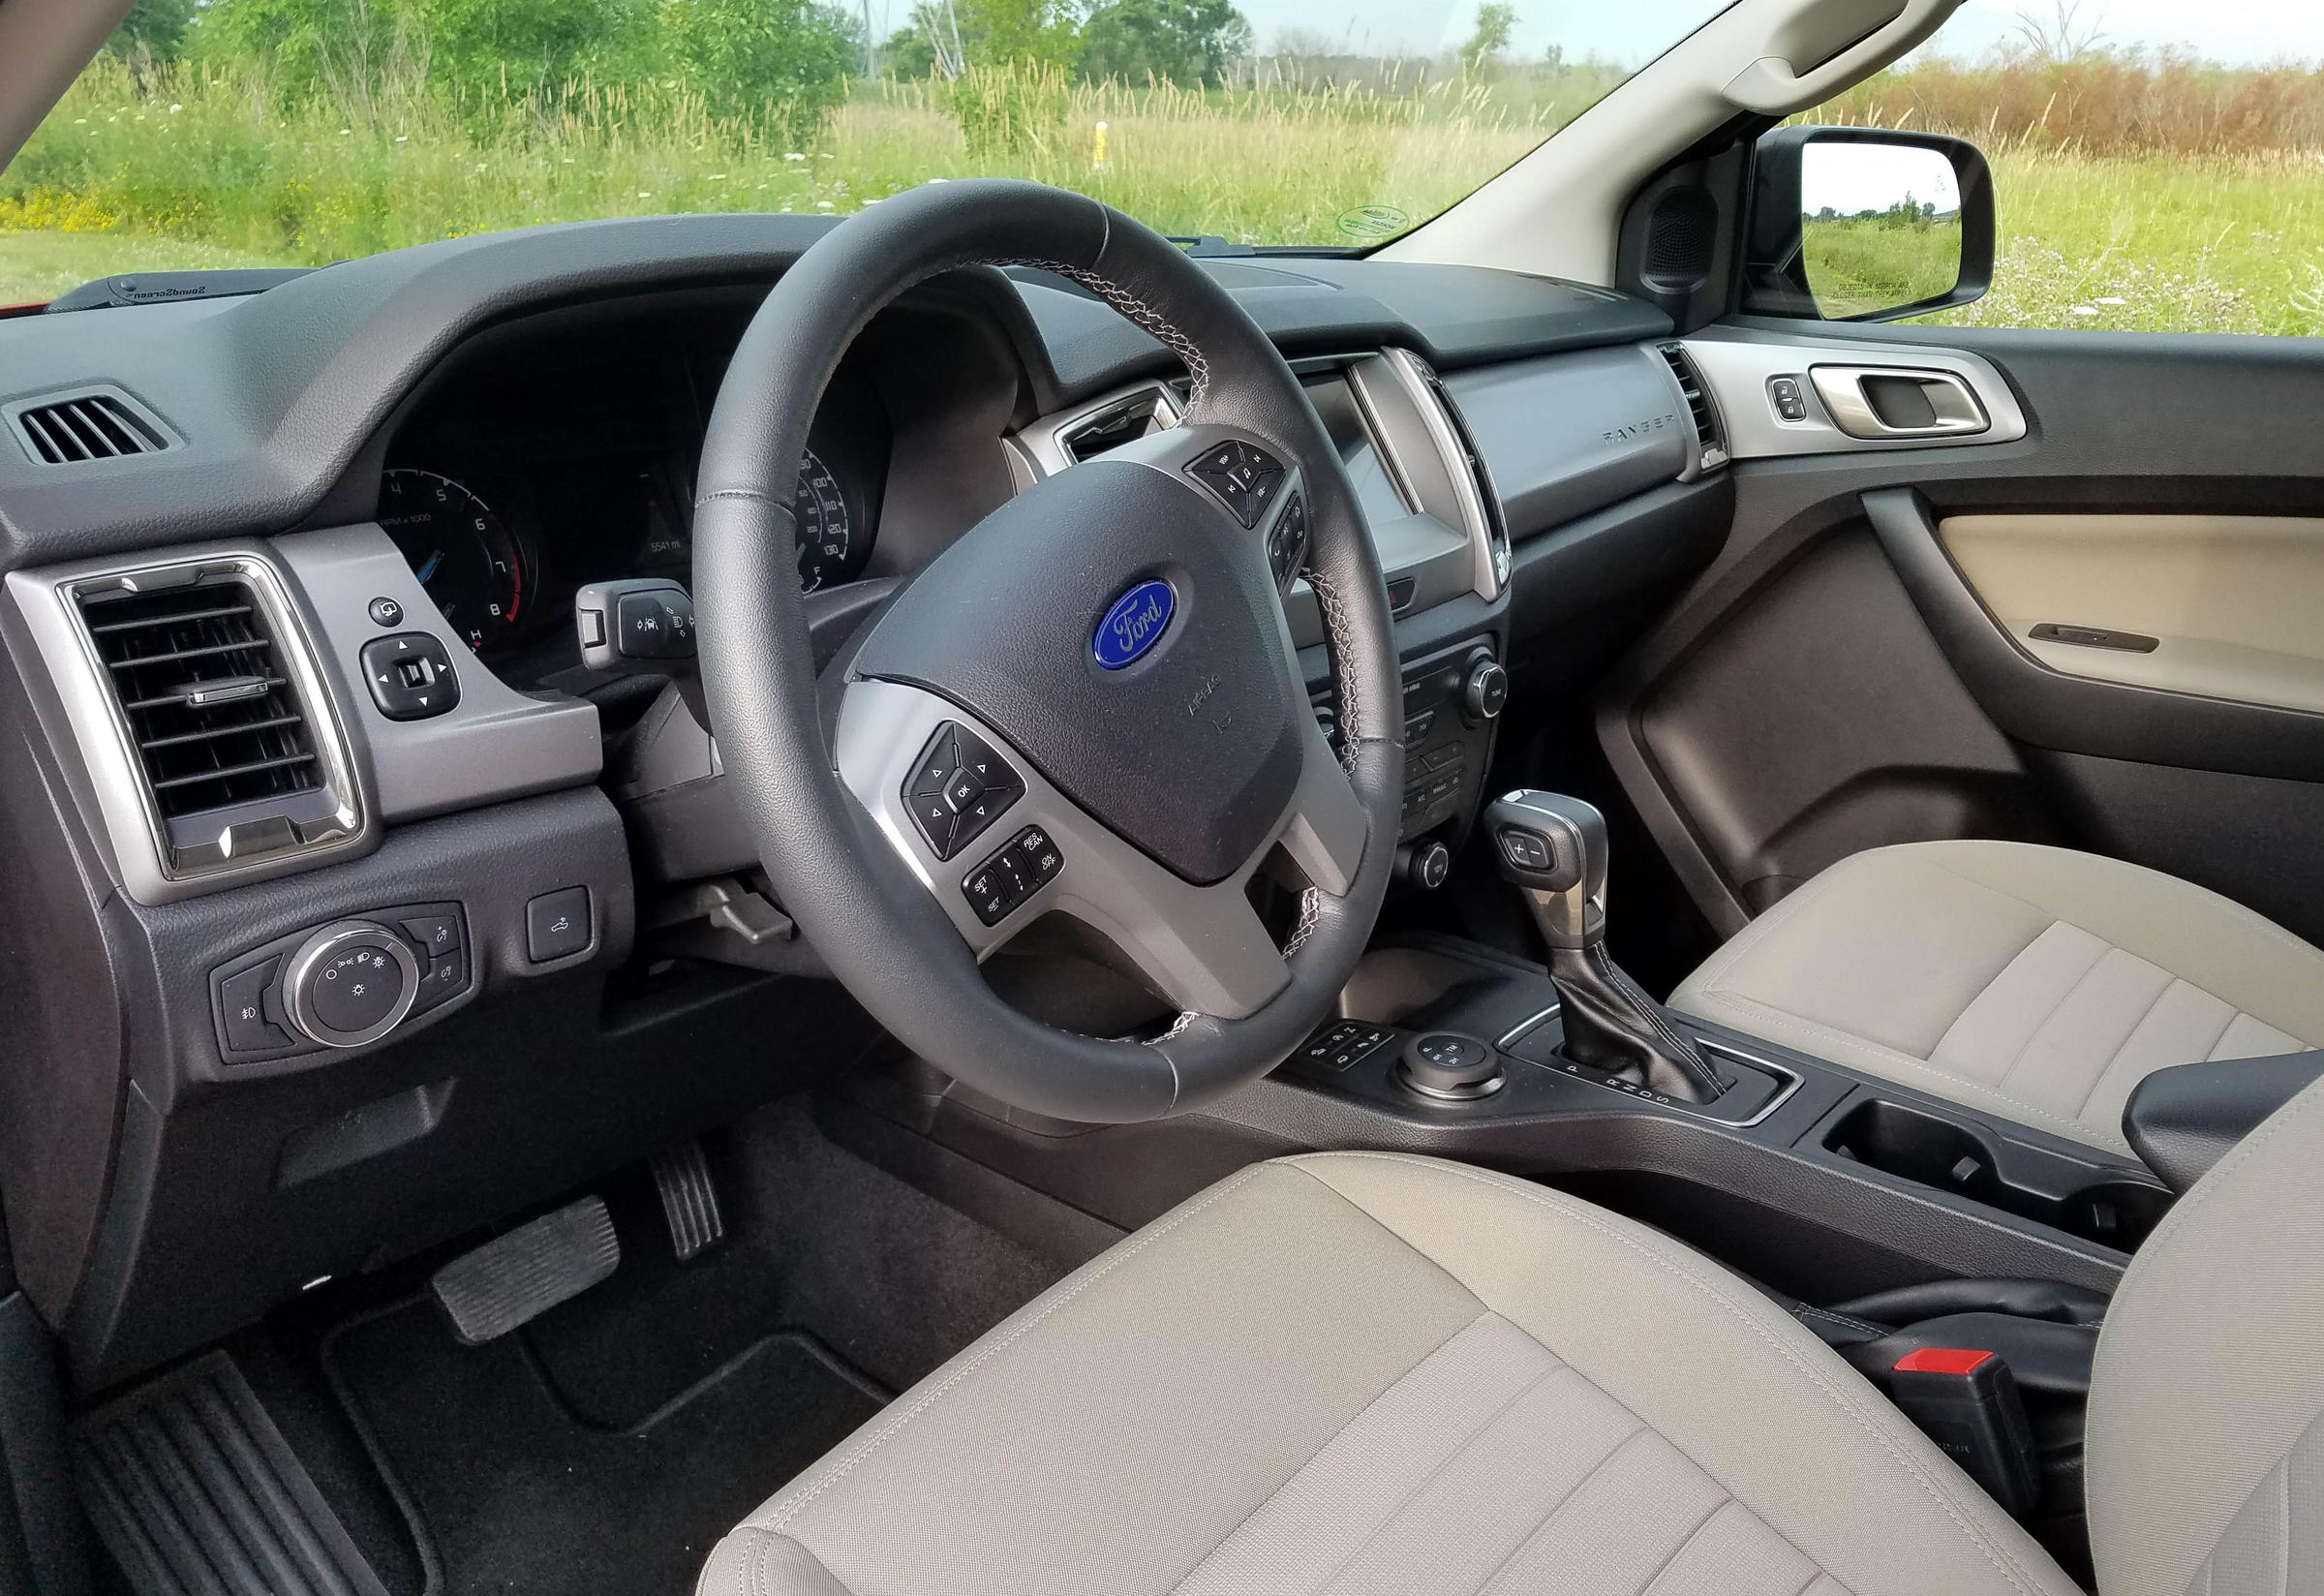 2019 Ford Ranger Xlt Supercrew 4x4 Review Wuwm